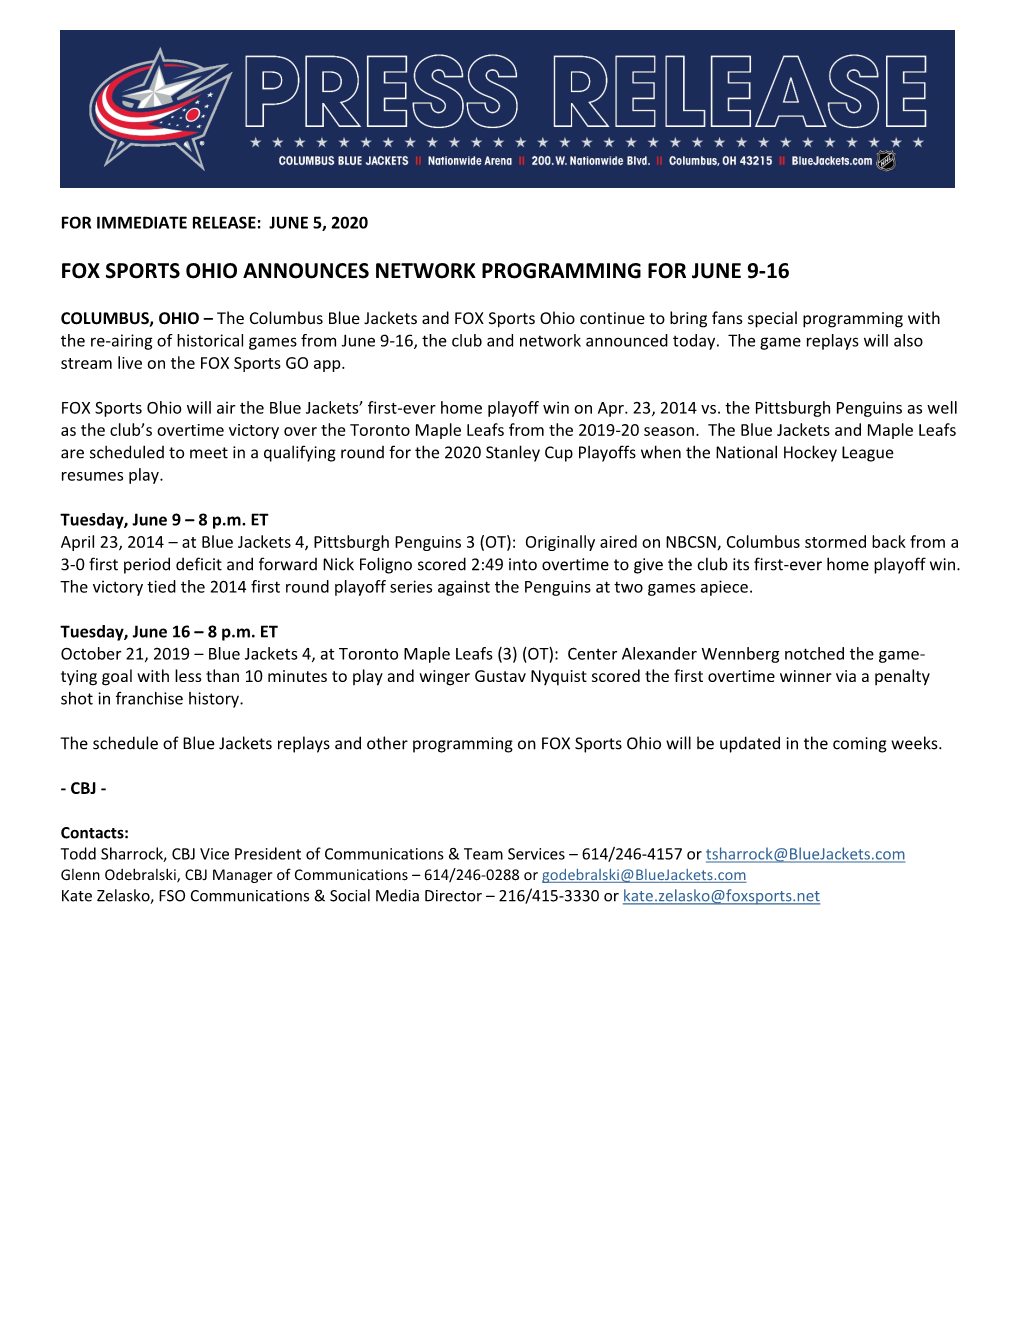 Fox Sports Ohio Announces Network Programming for June 9-16